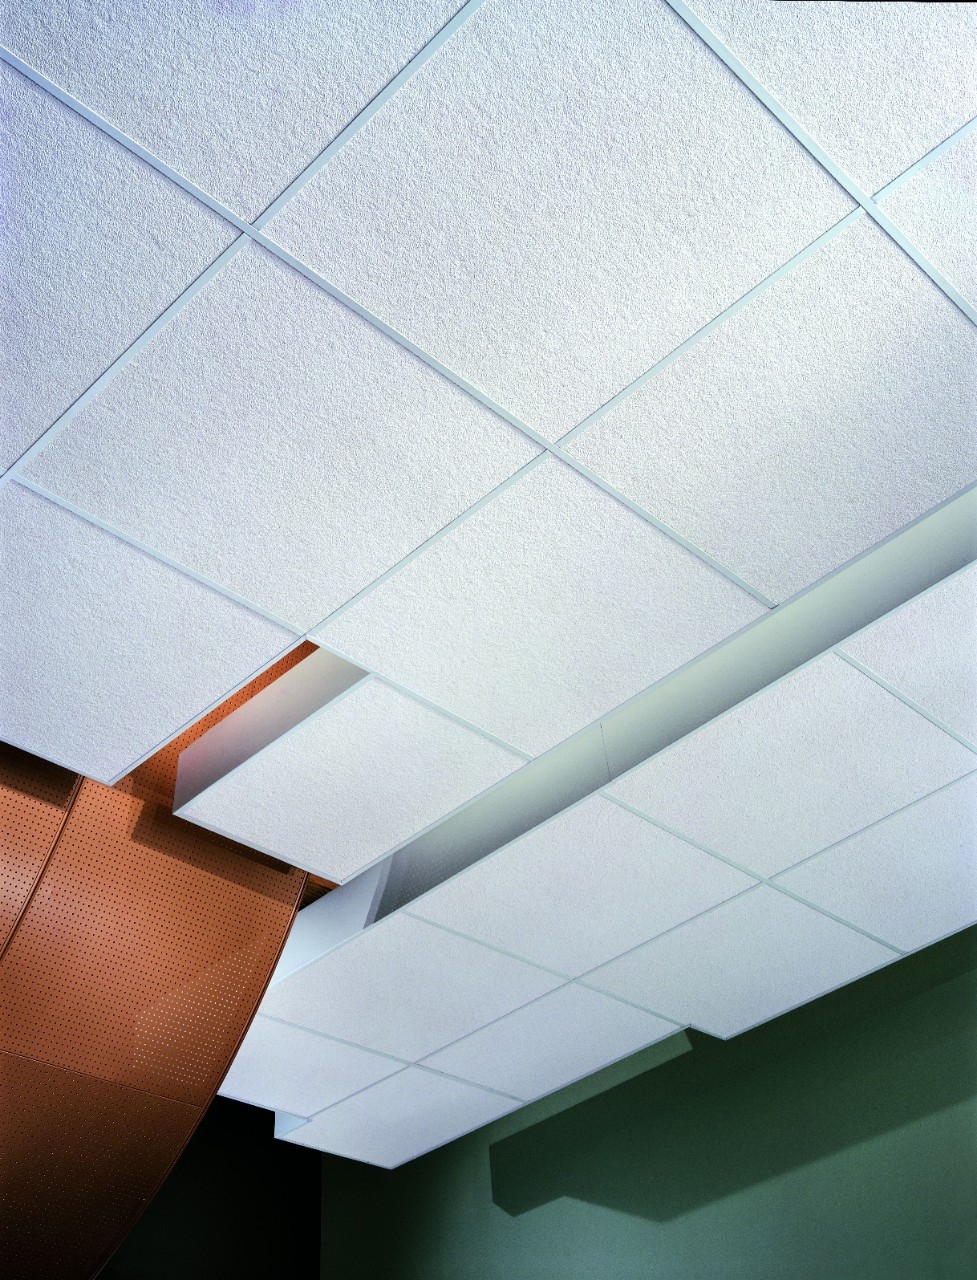 Usg Vinyl Faced Ceiling Tile Usg Vinyl Faced Ceiling Tile usg astro acoustical panels fire rated ceiling tiles 977 X 1280